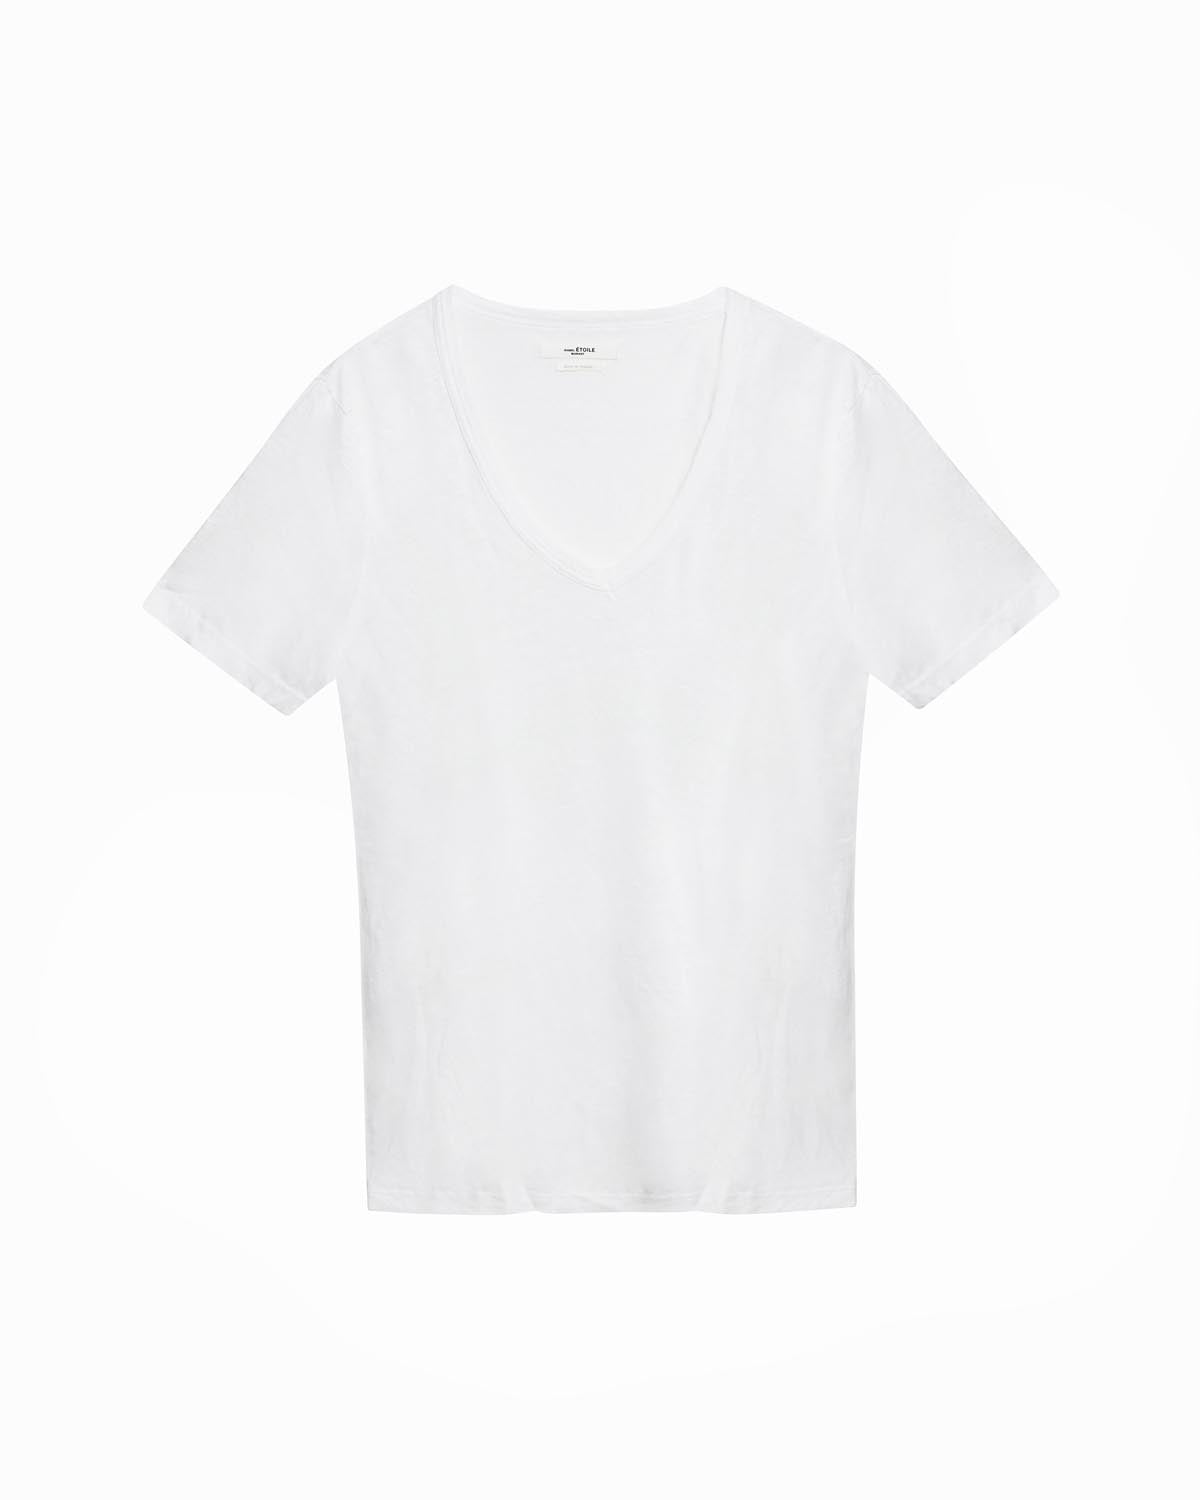 Kranger tee-shirt Woman White 2